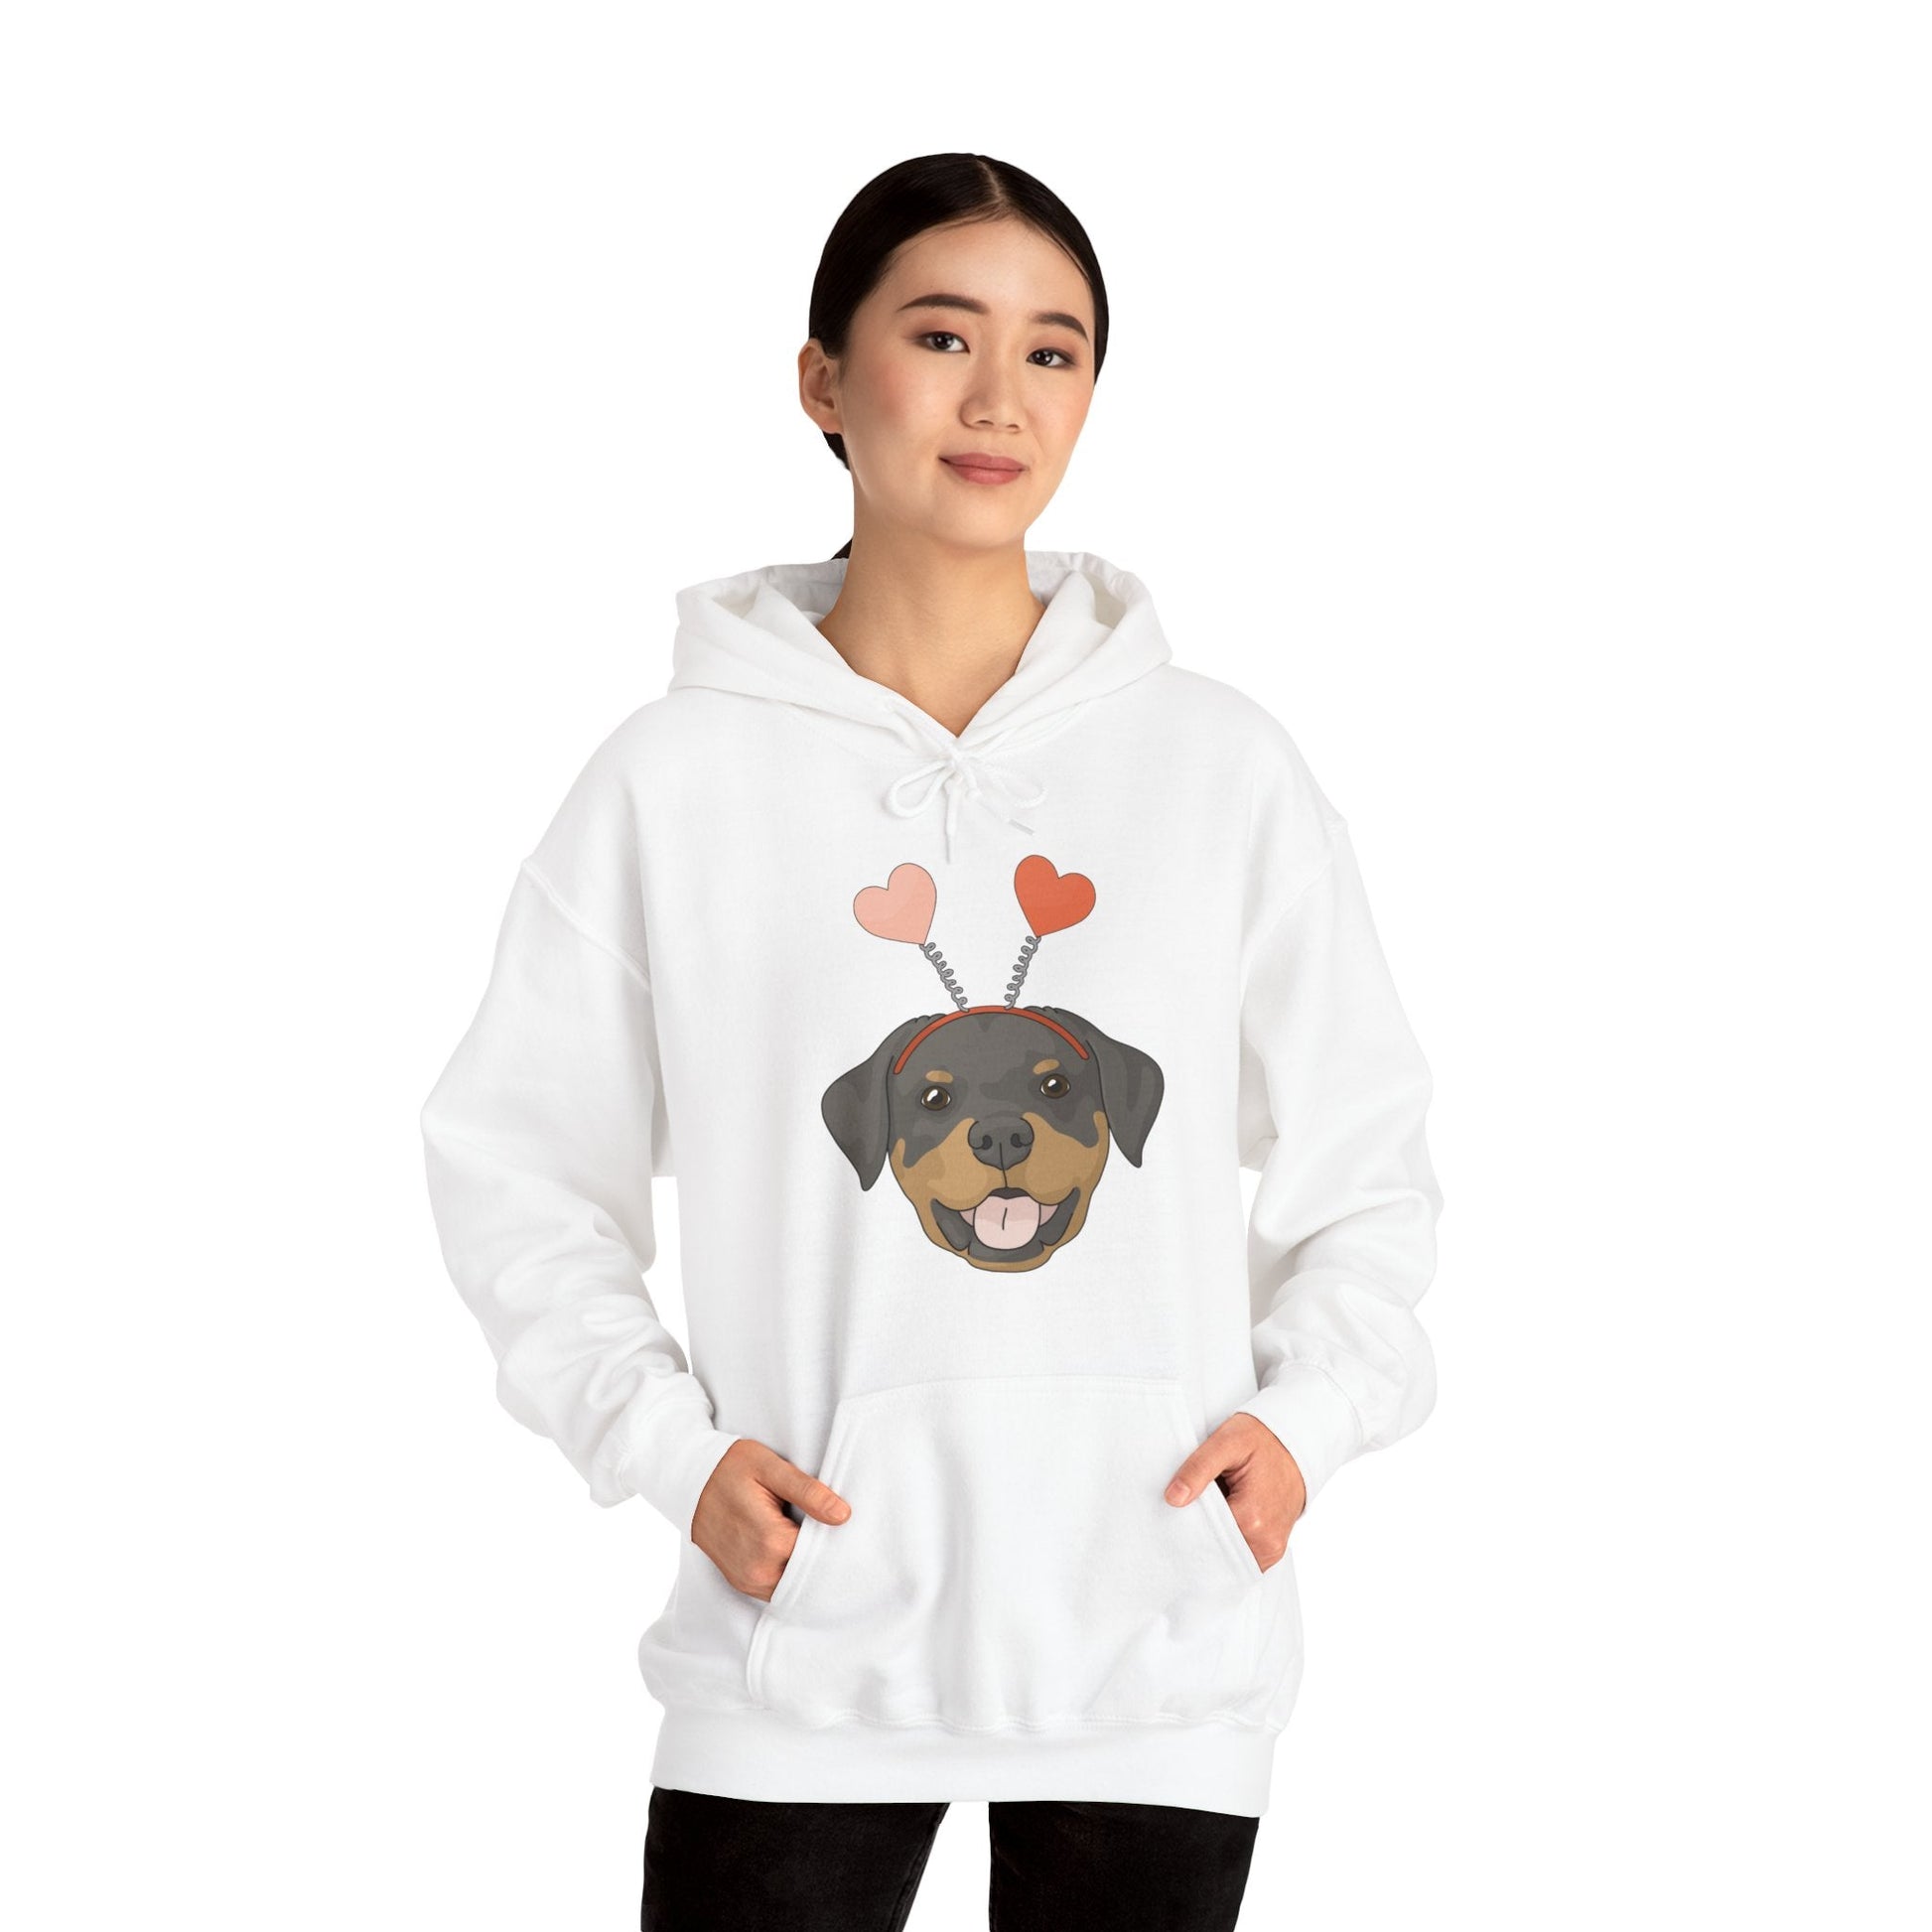 A Very Rottie Valentine | Hooded Sweatshirt - Detezi Designs-20033811000390653687